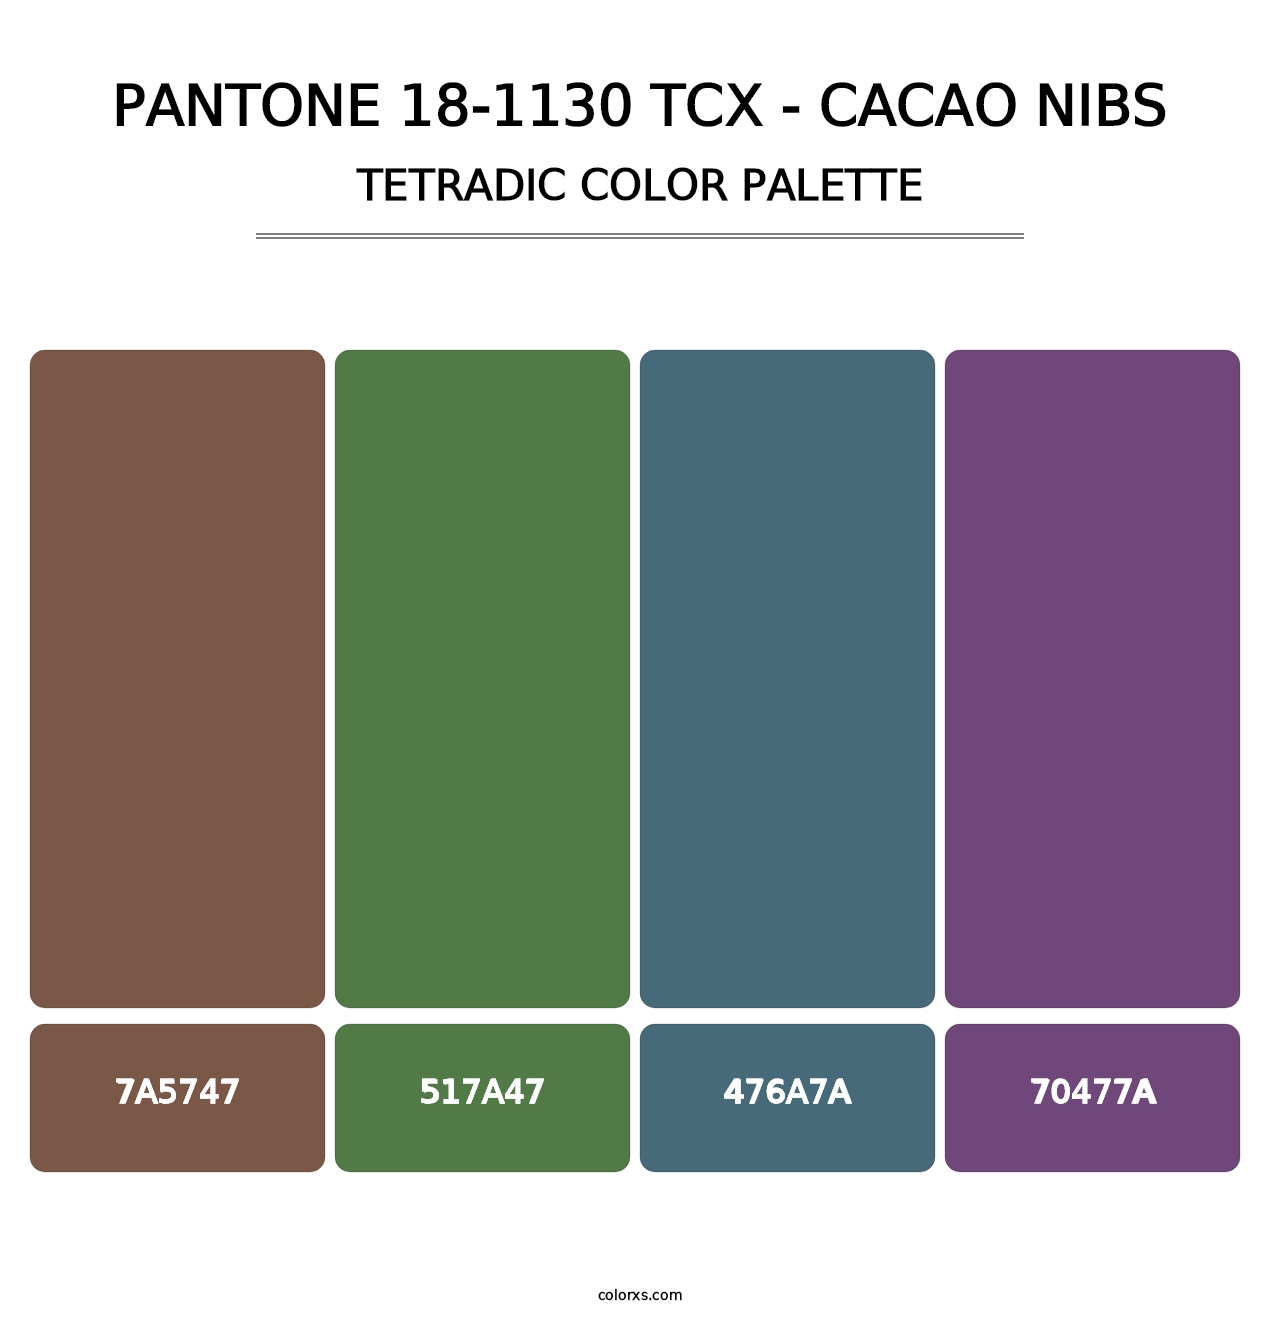 PANTONE 18-1130 TCX - Cacao Nibs - Tetradic Color Palette